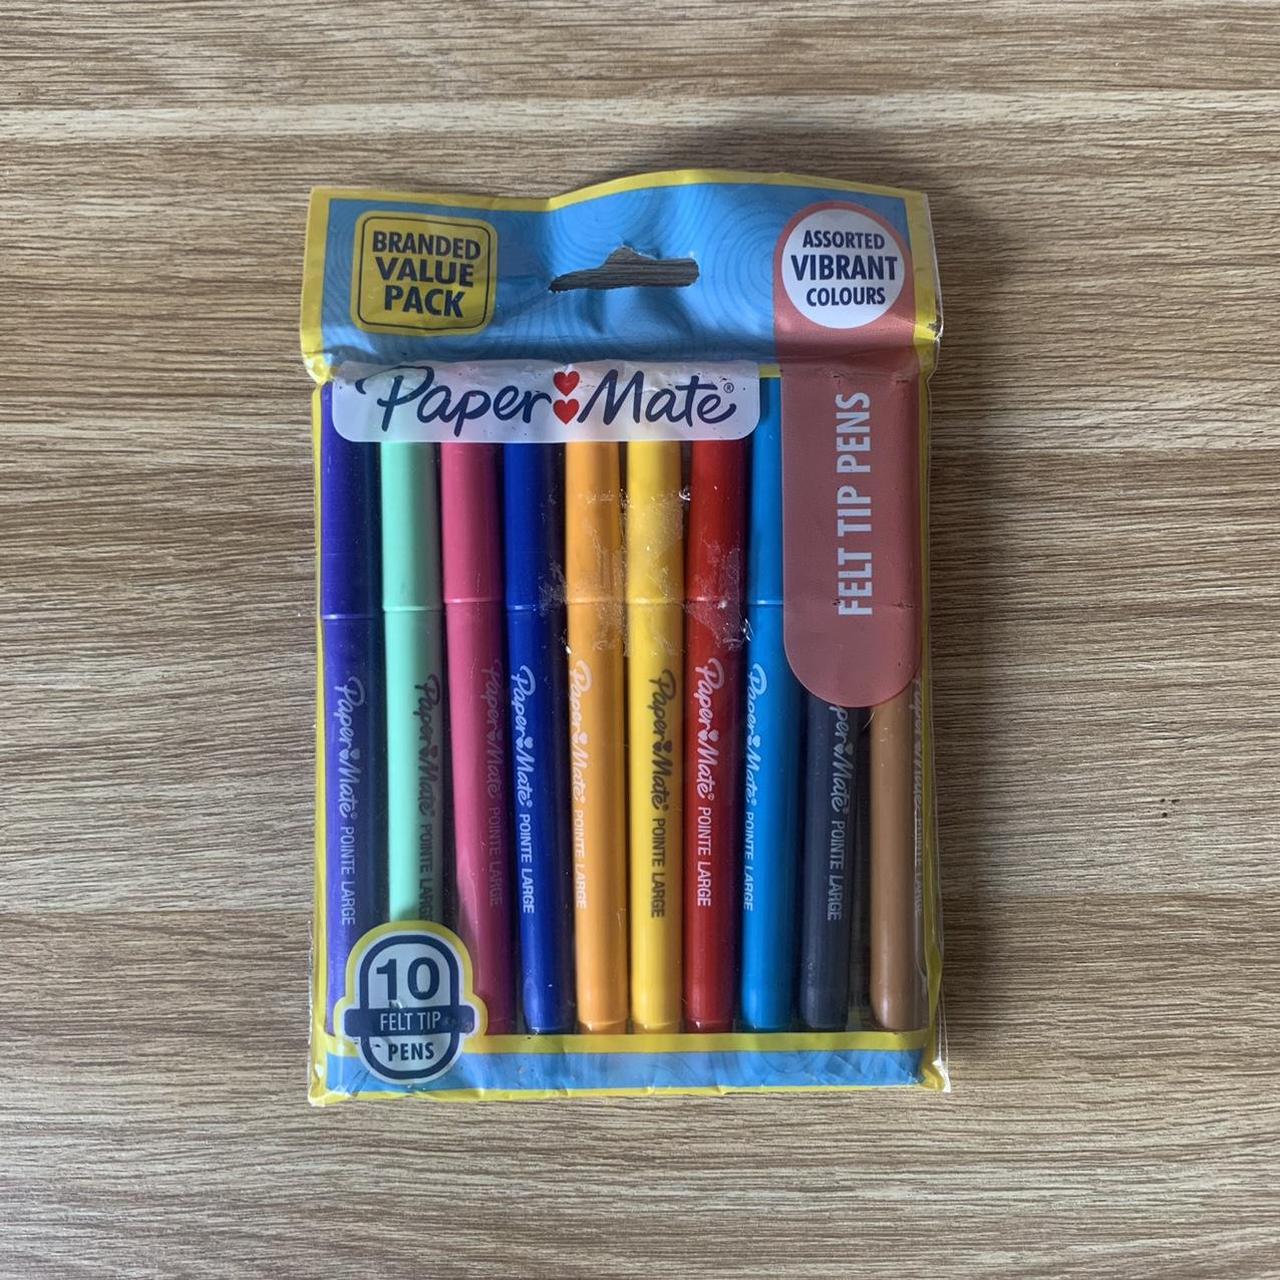 papermate felt tip pens 
10 pack 
brand new 

#art... - Depop